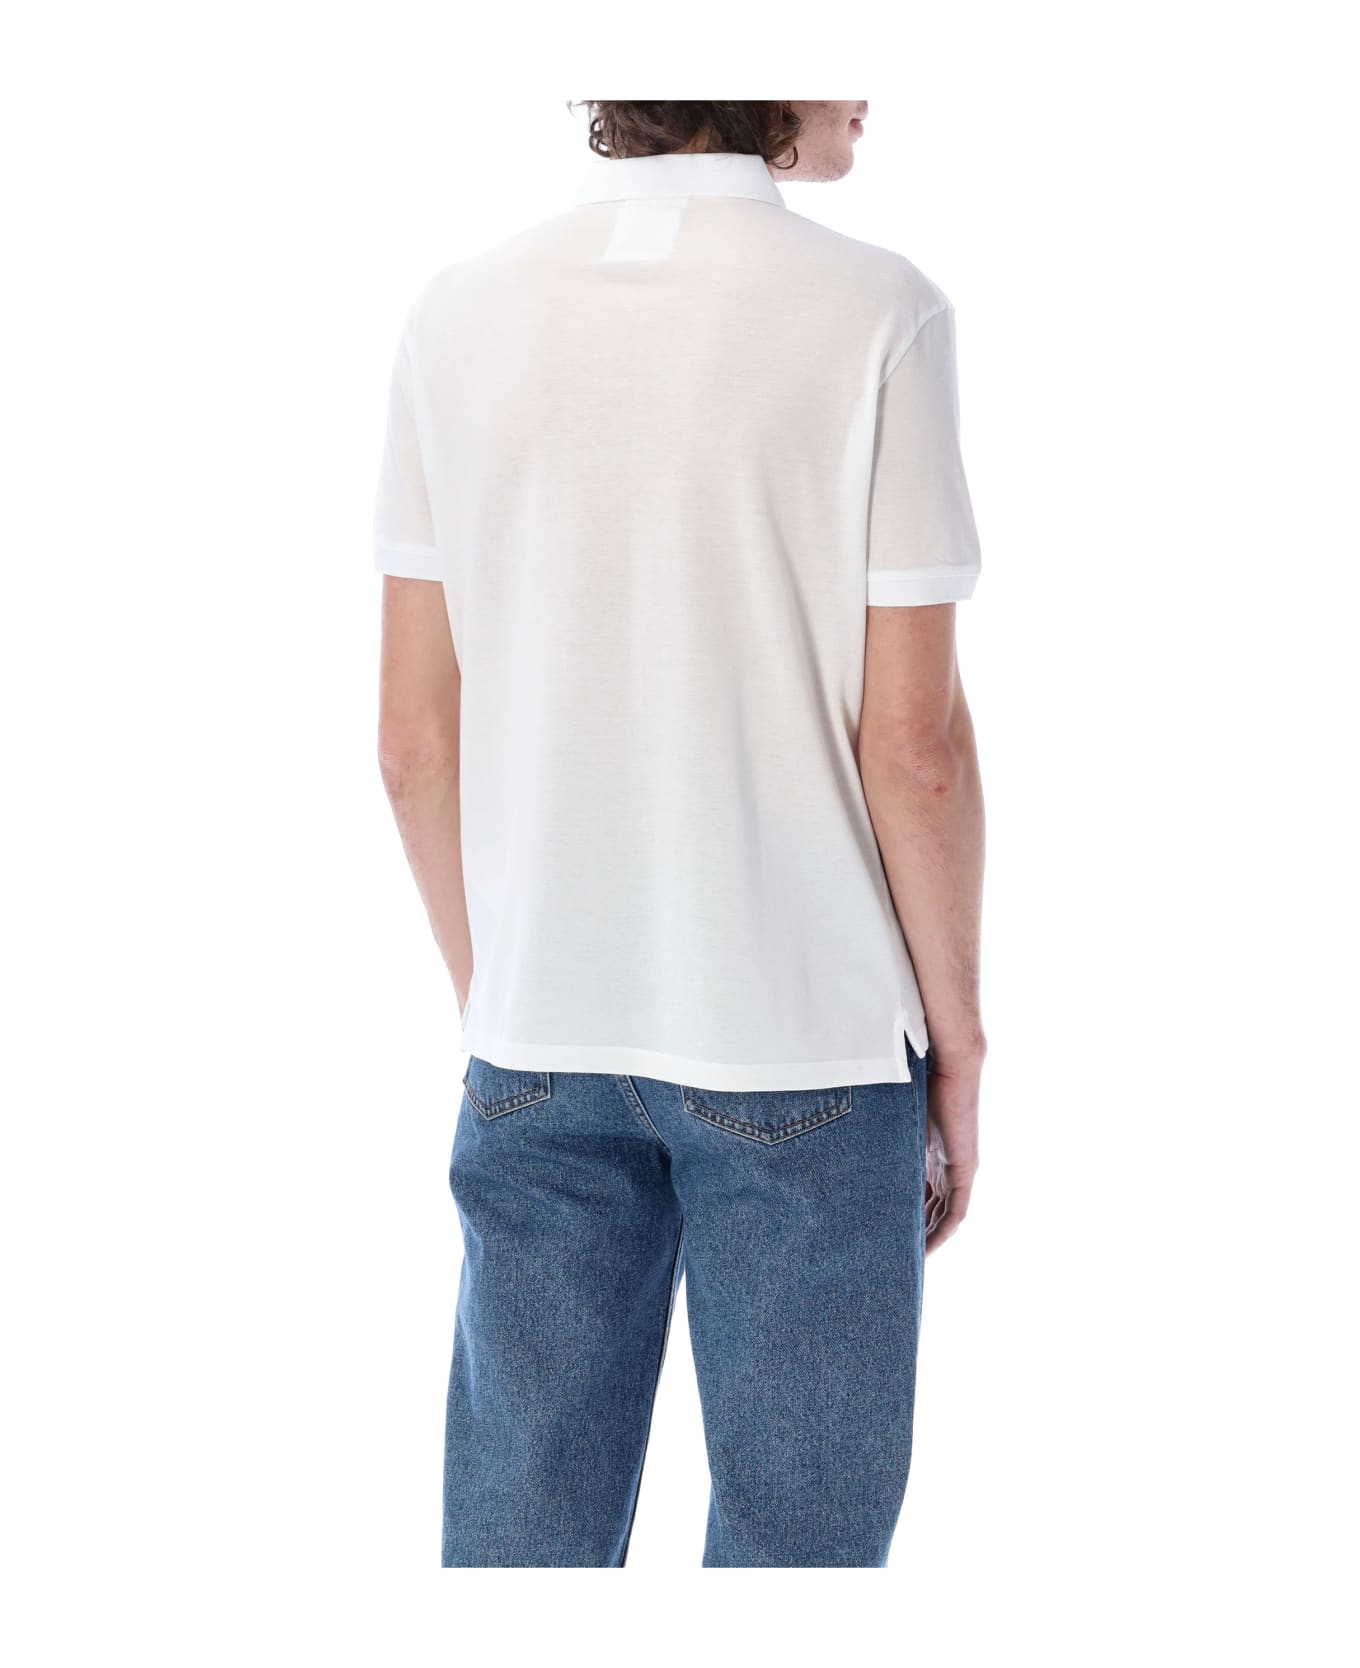 Emporio Armani Piqué Polo Shirt With Micro Eagle - WHITE ポロシャツ